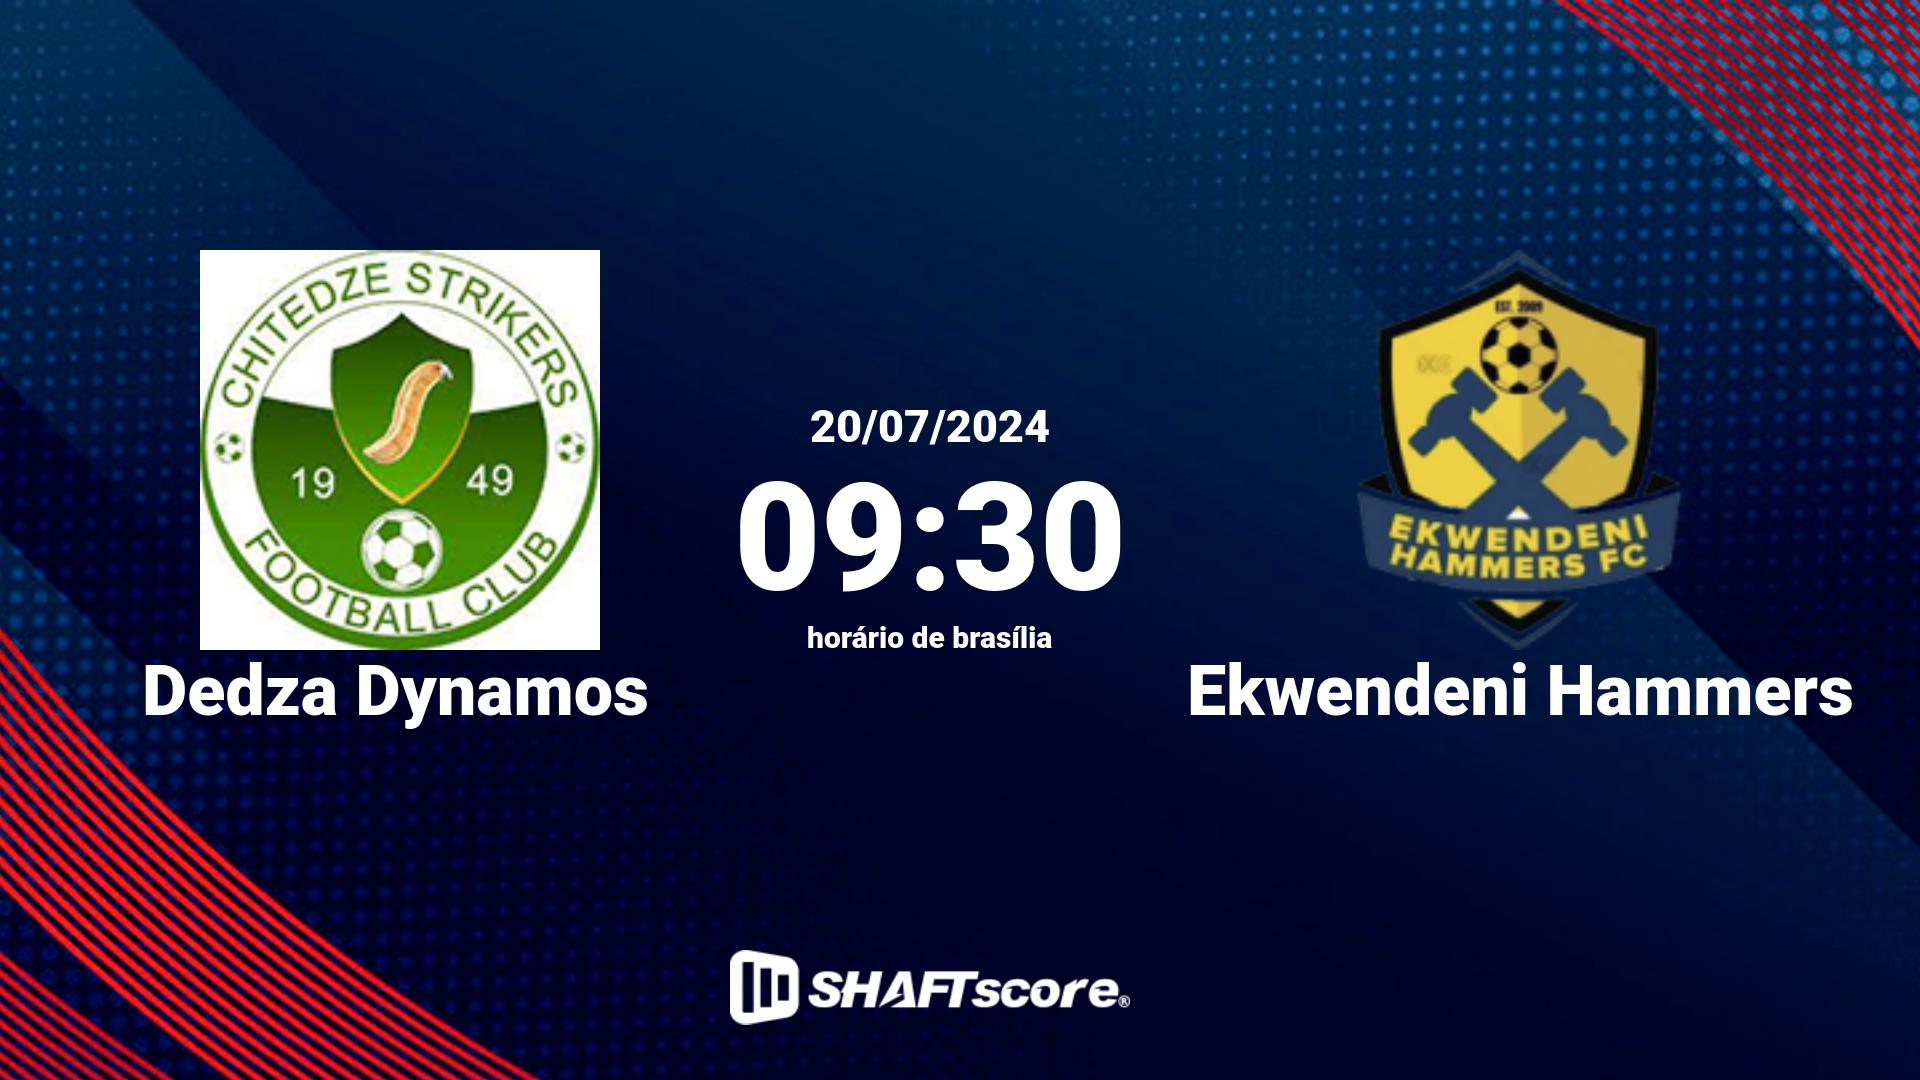 Estatísticas do jogo Dedza Dynamos vs Ekwendeni Hammers 20.07 09:30